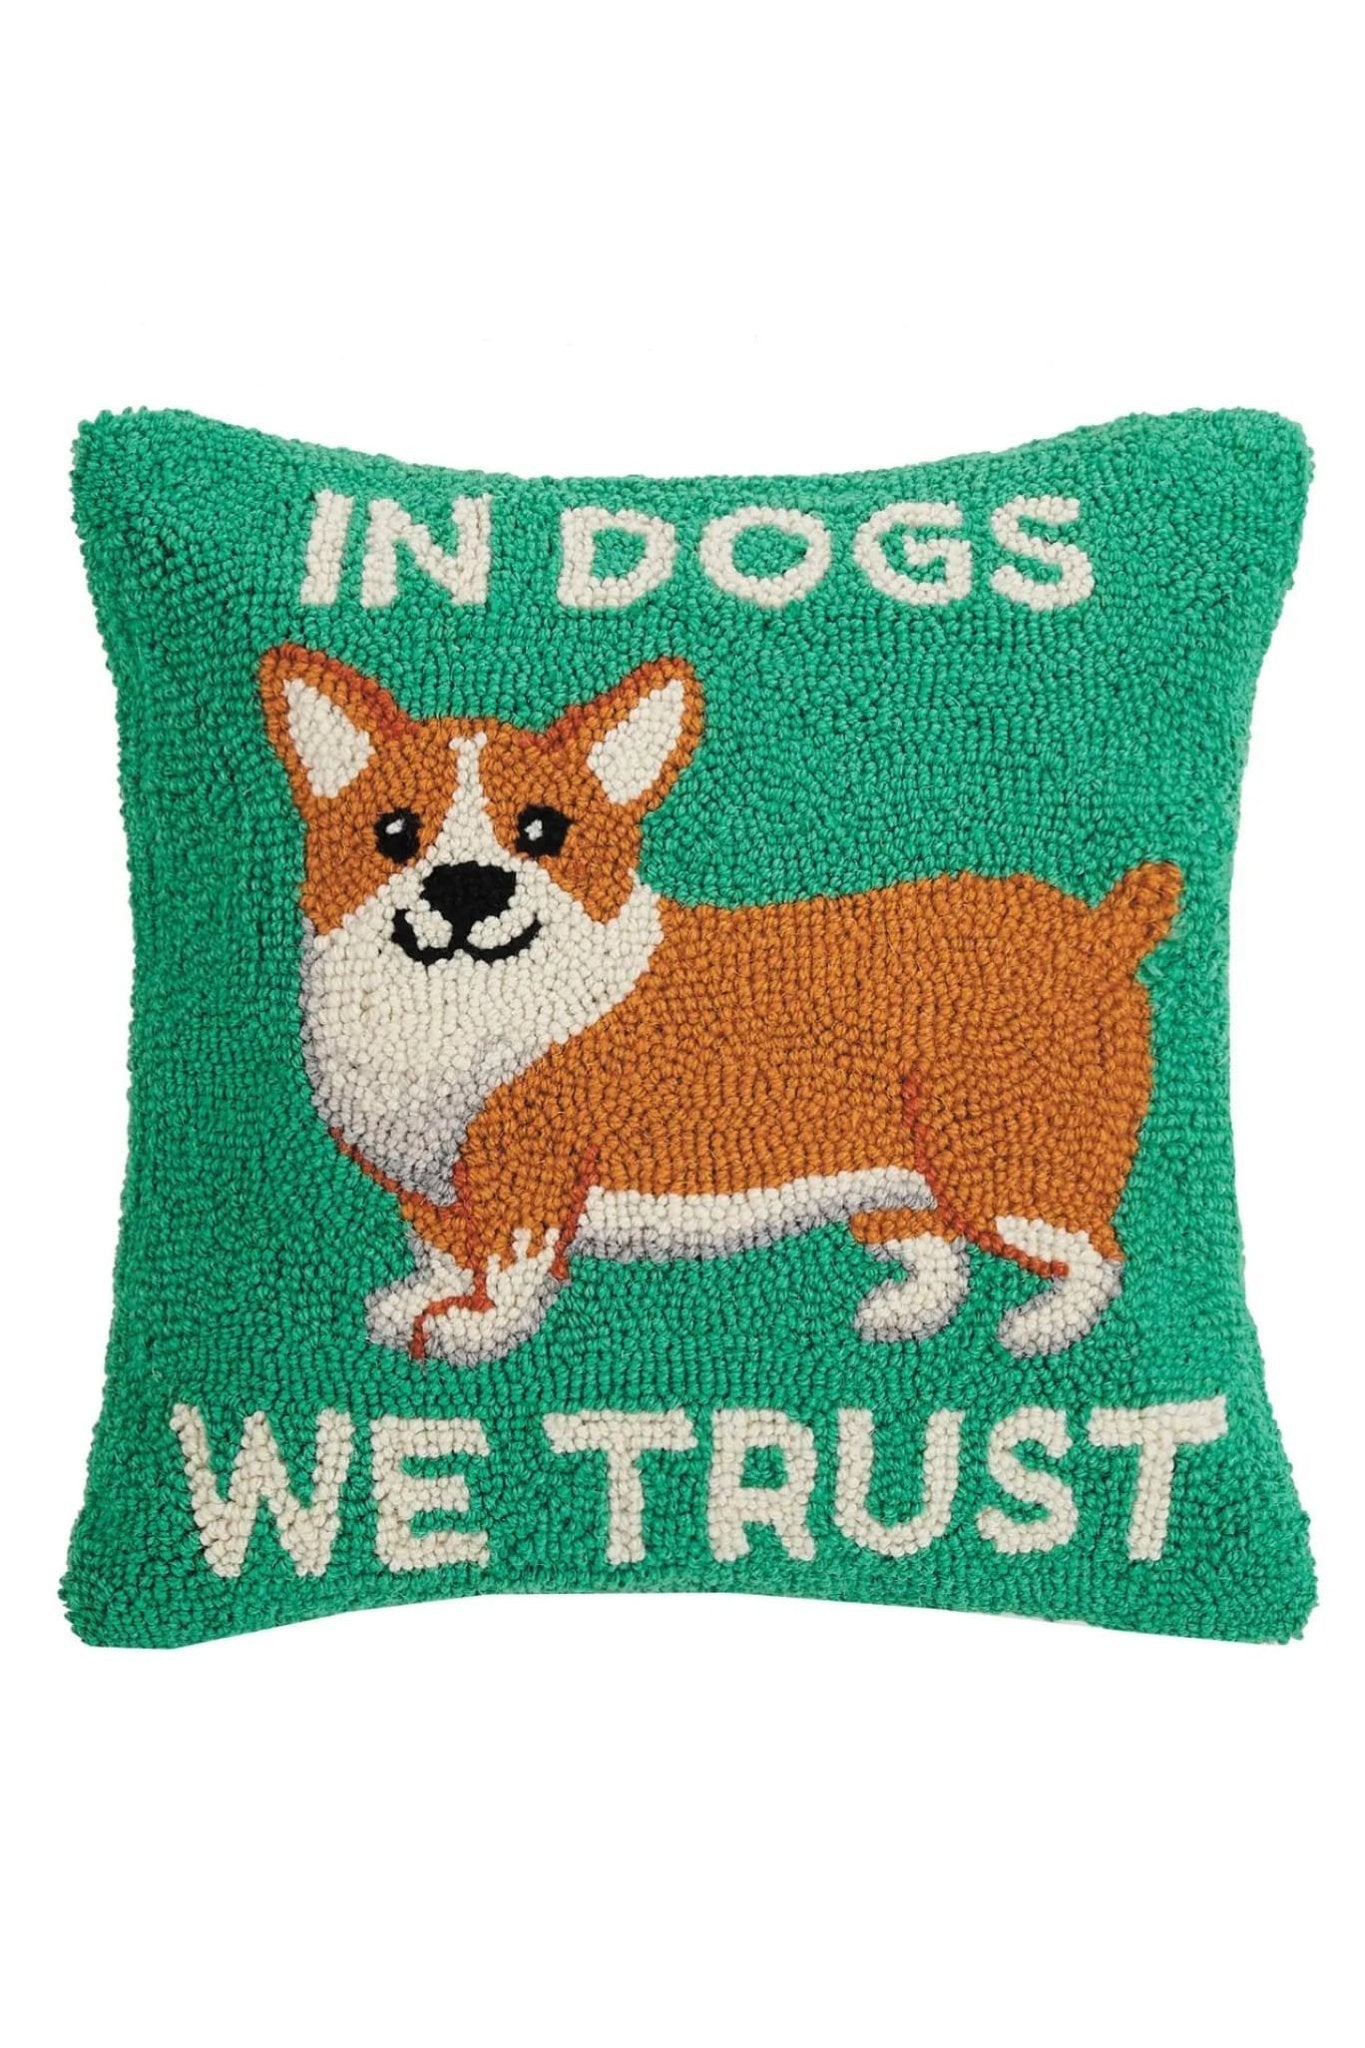 In Dogs We Trust Hook Throw Pillow - Pillows